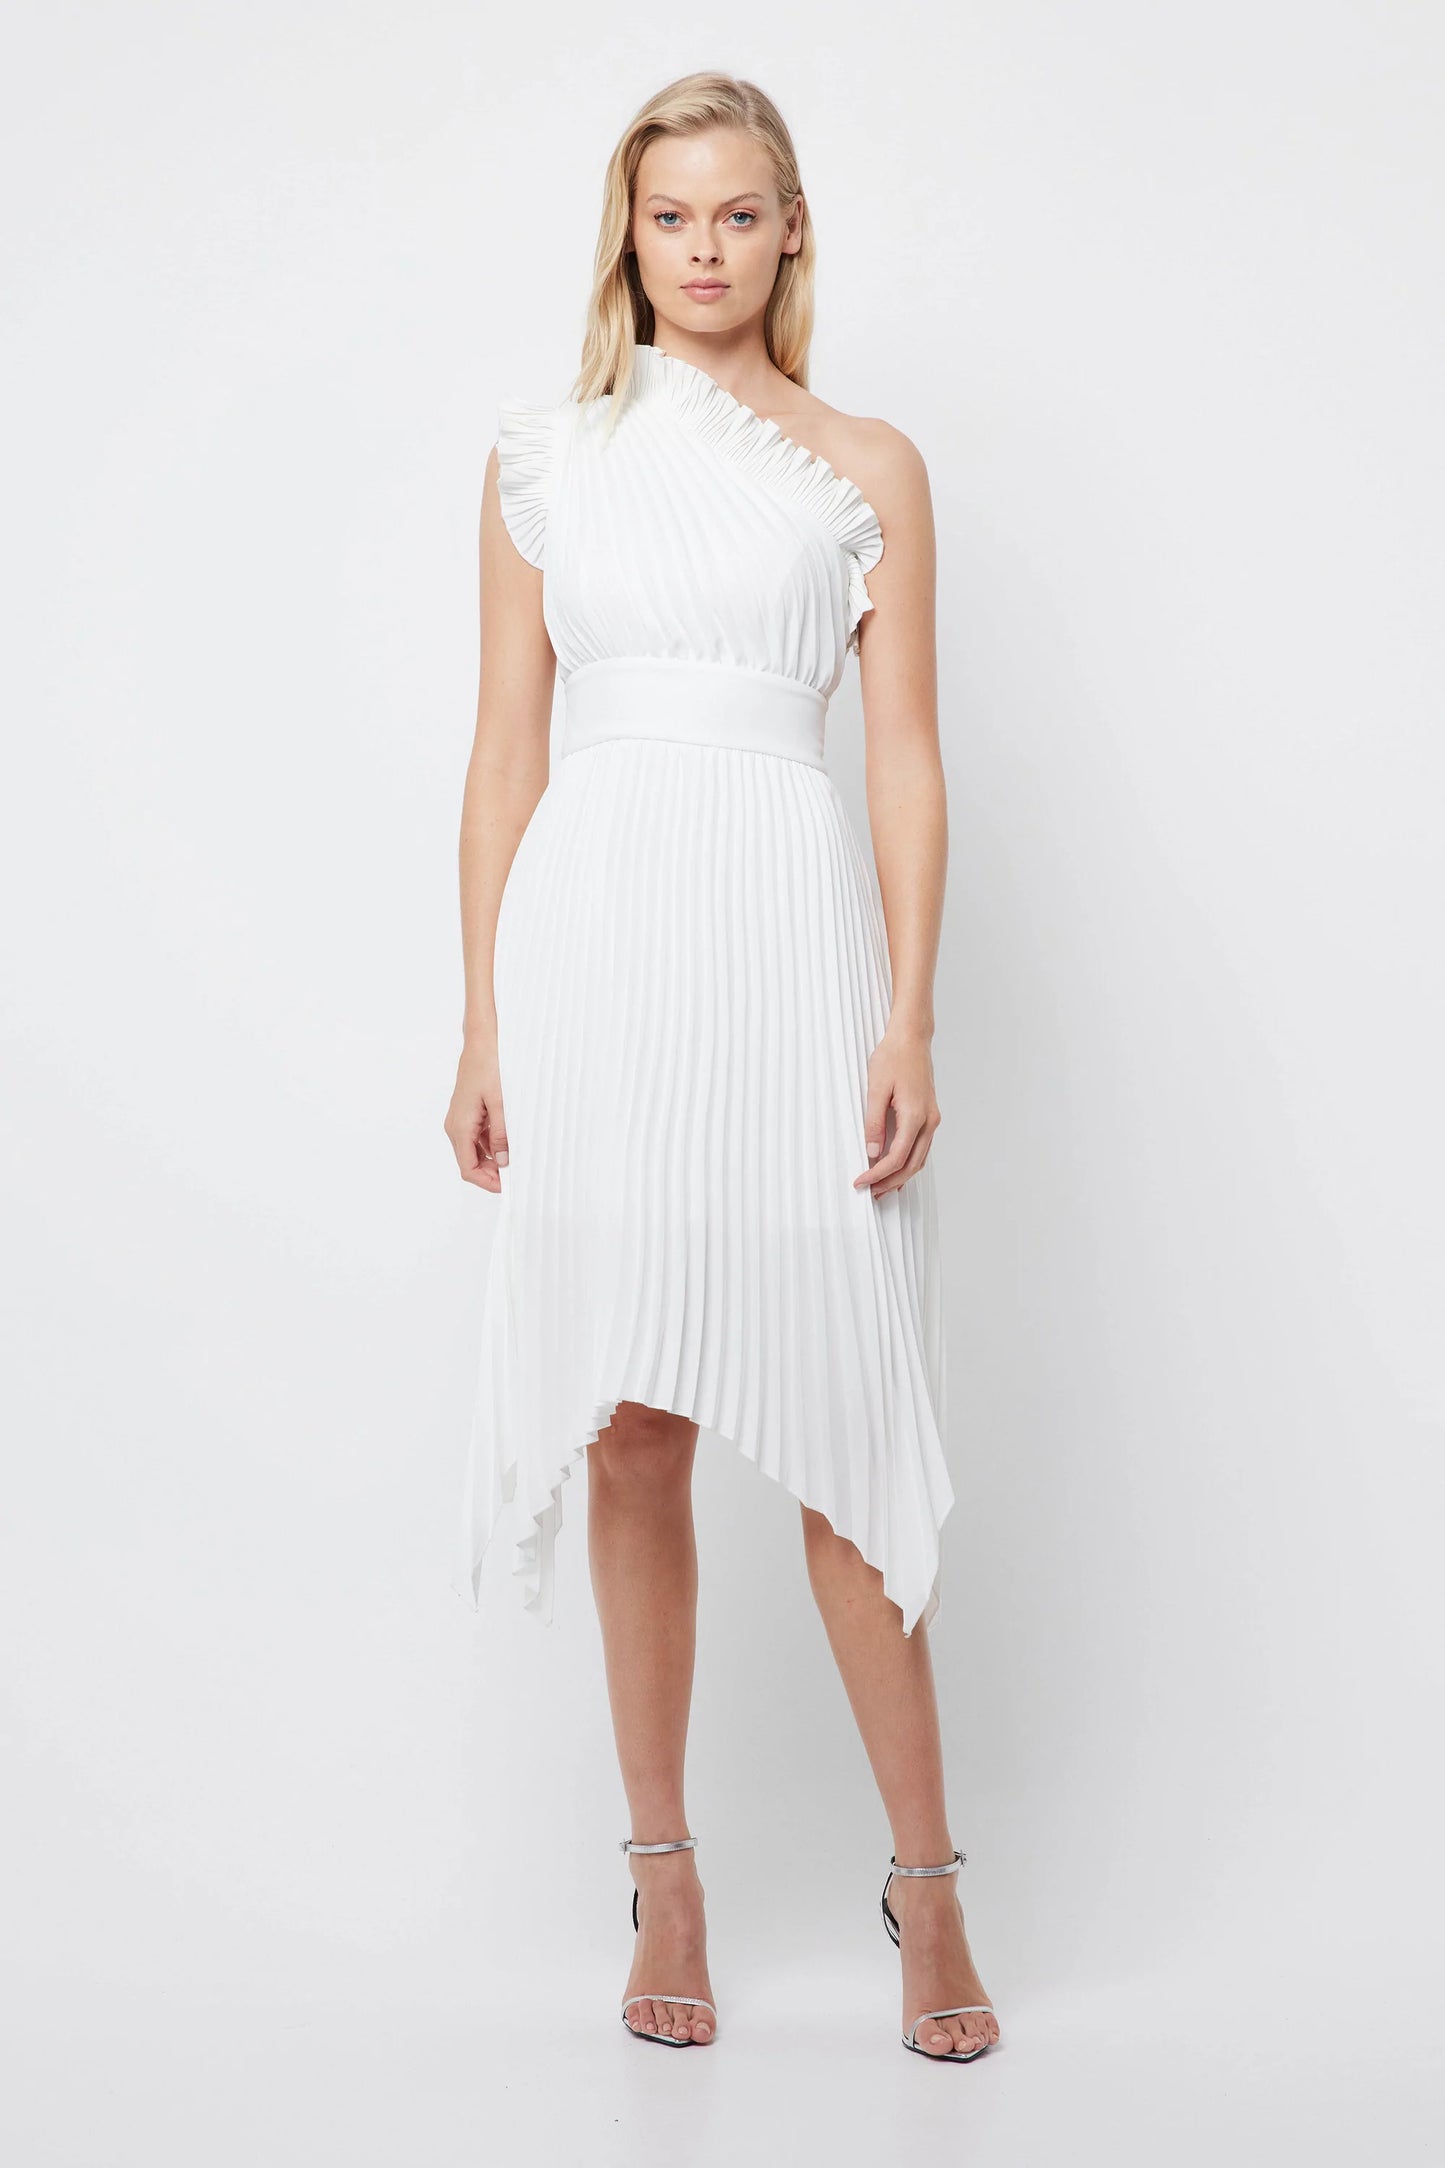 The Lady Like Midi Dress - White